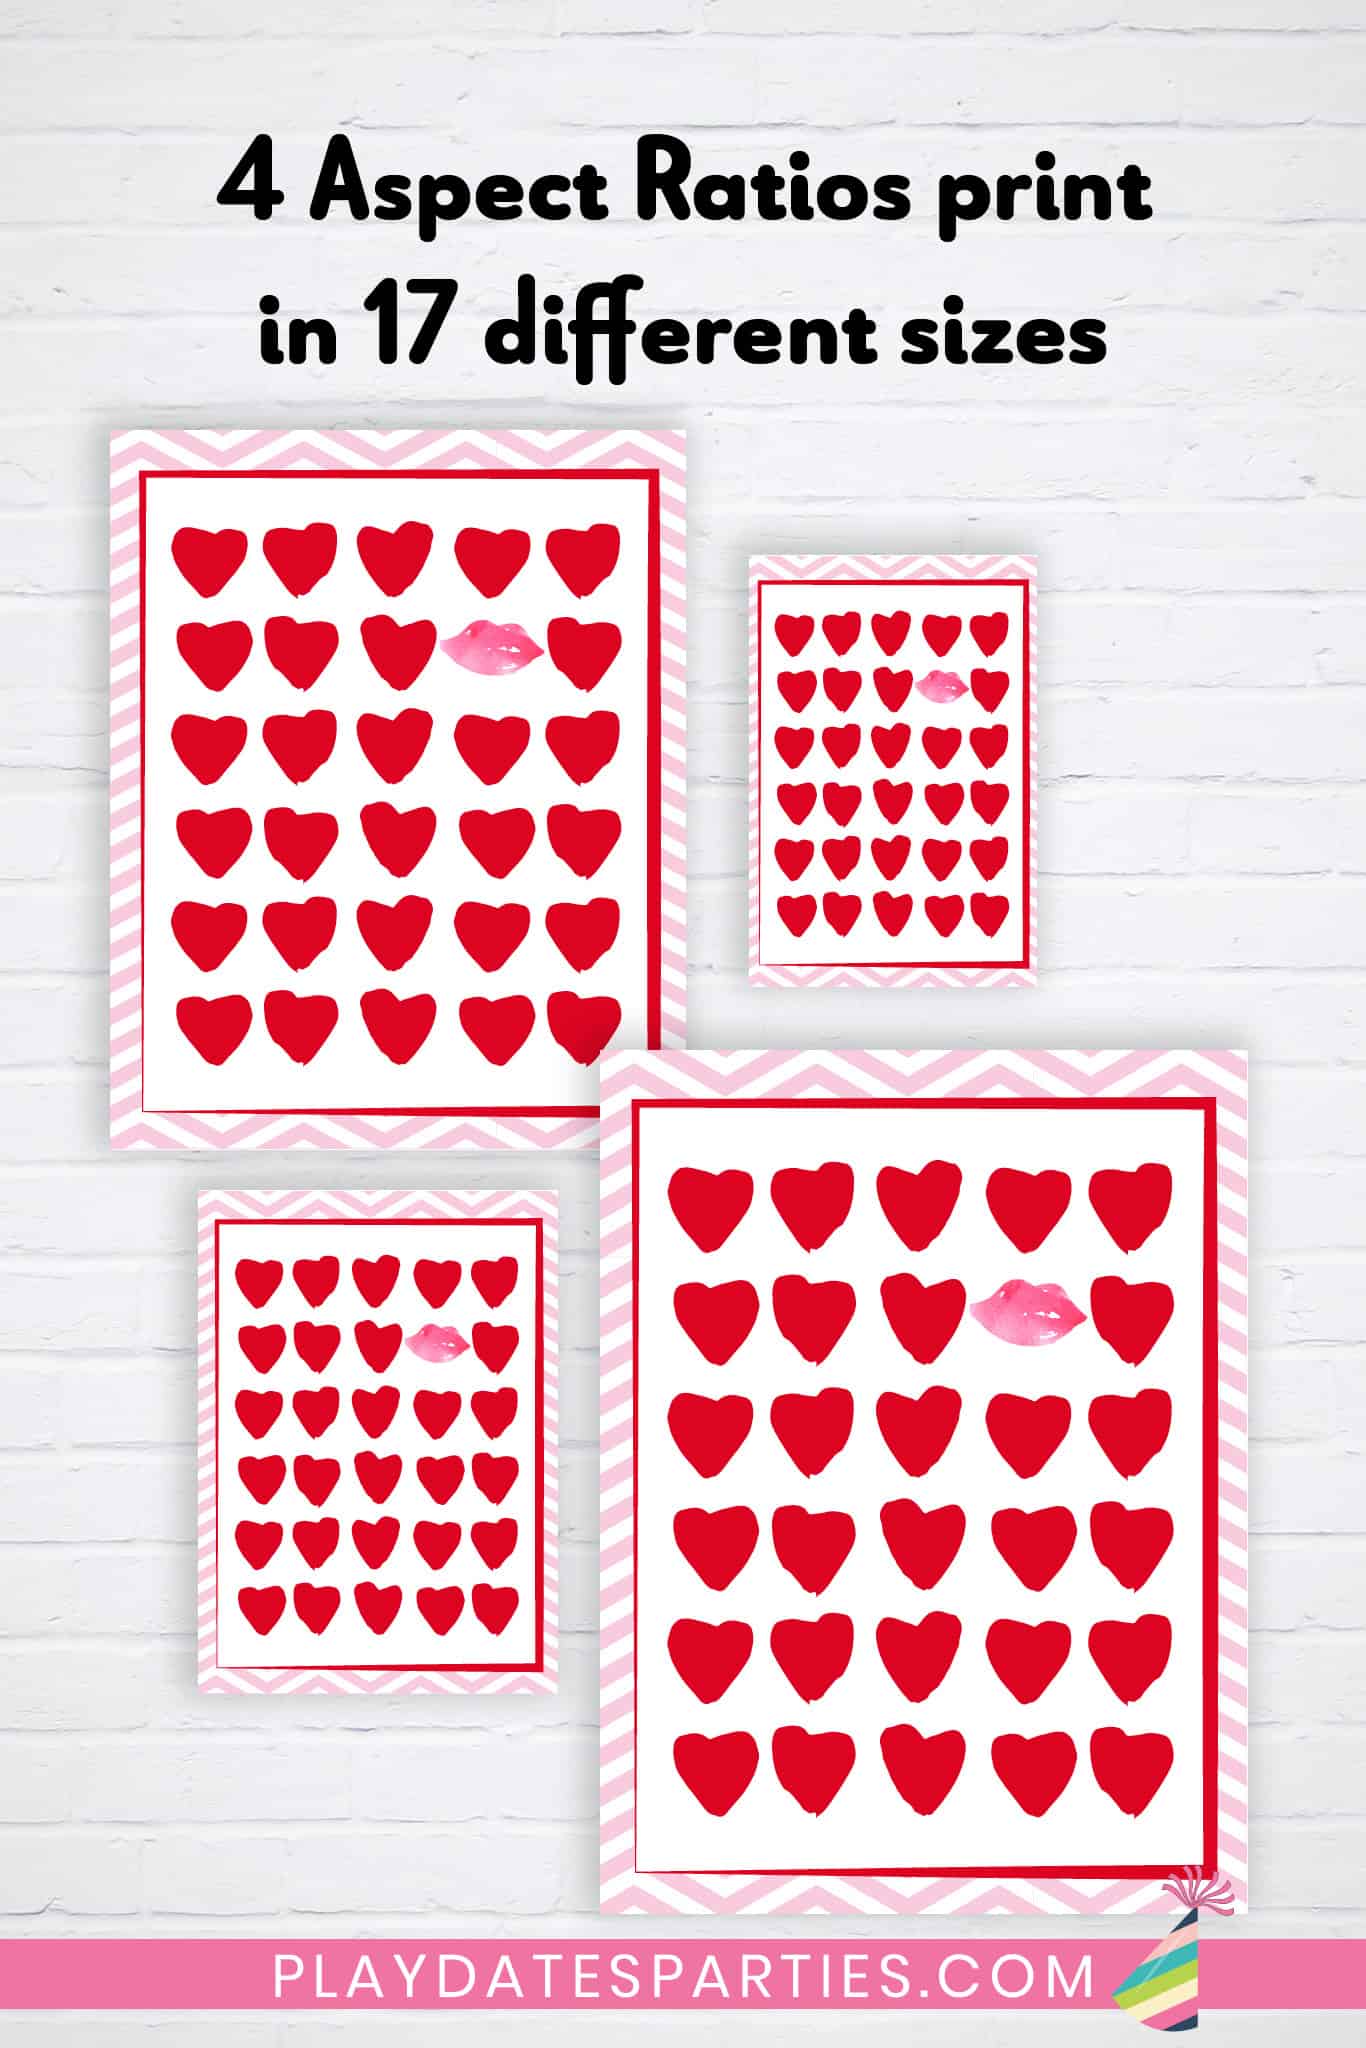 Valentine's Day Hearts Sign/Art Print